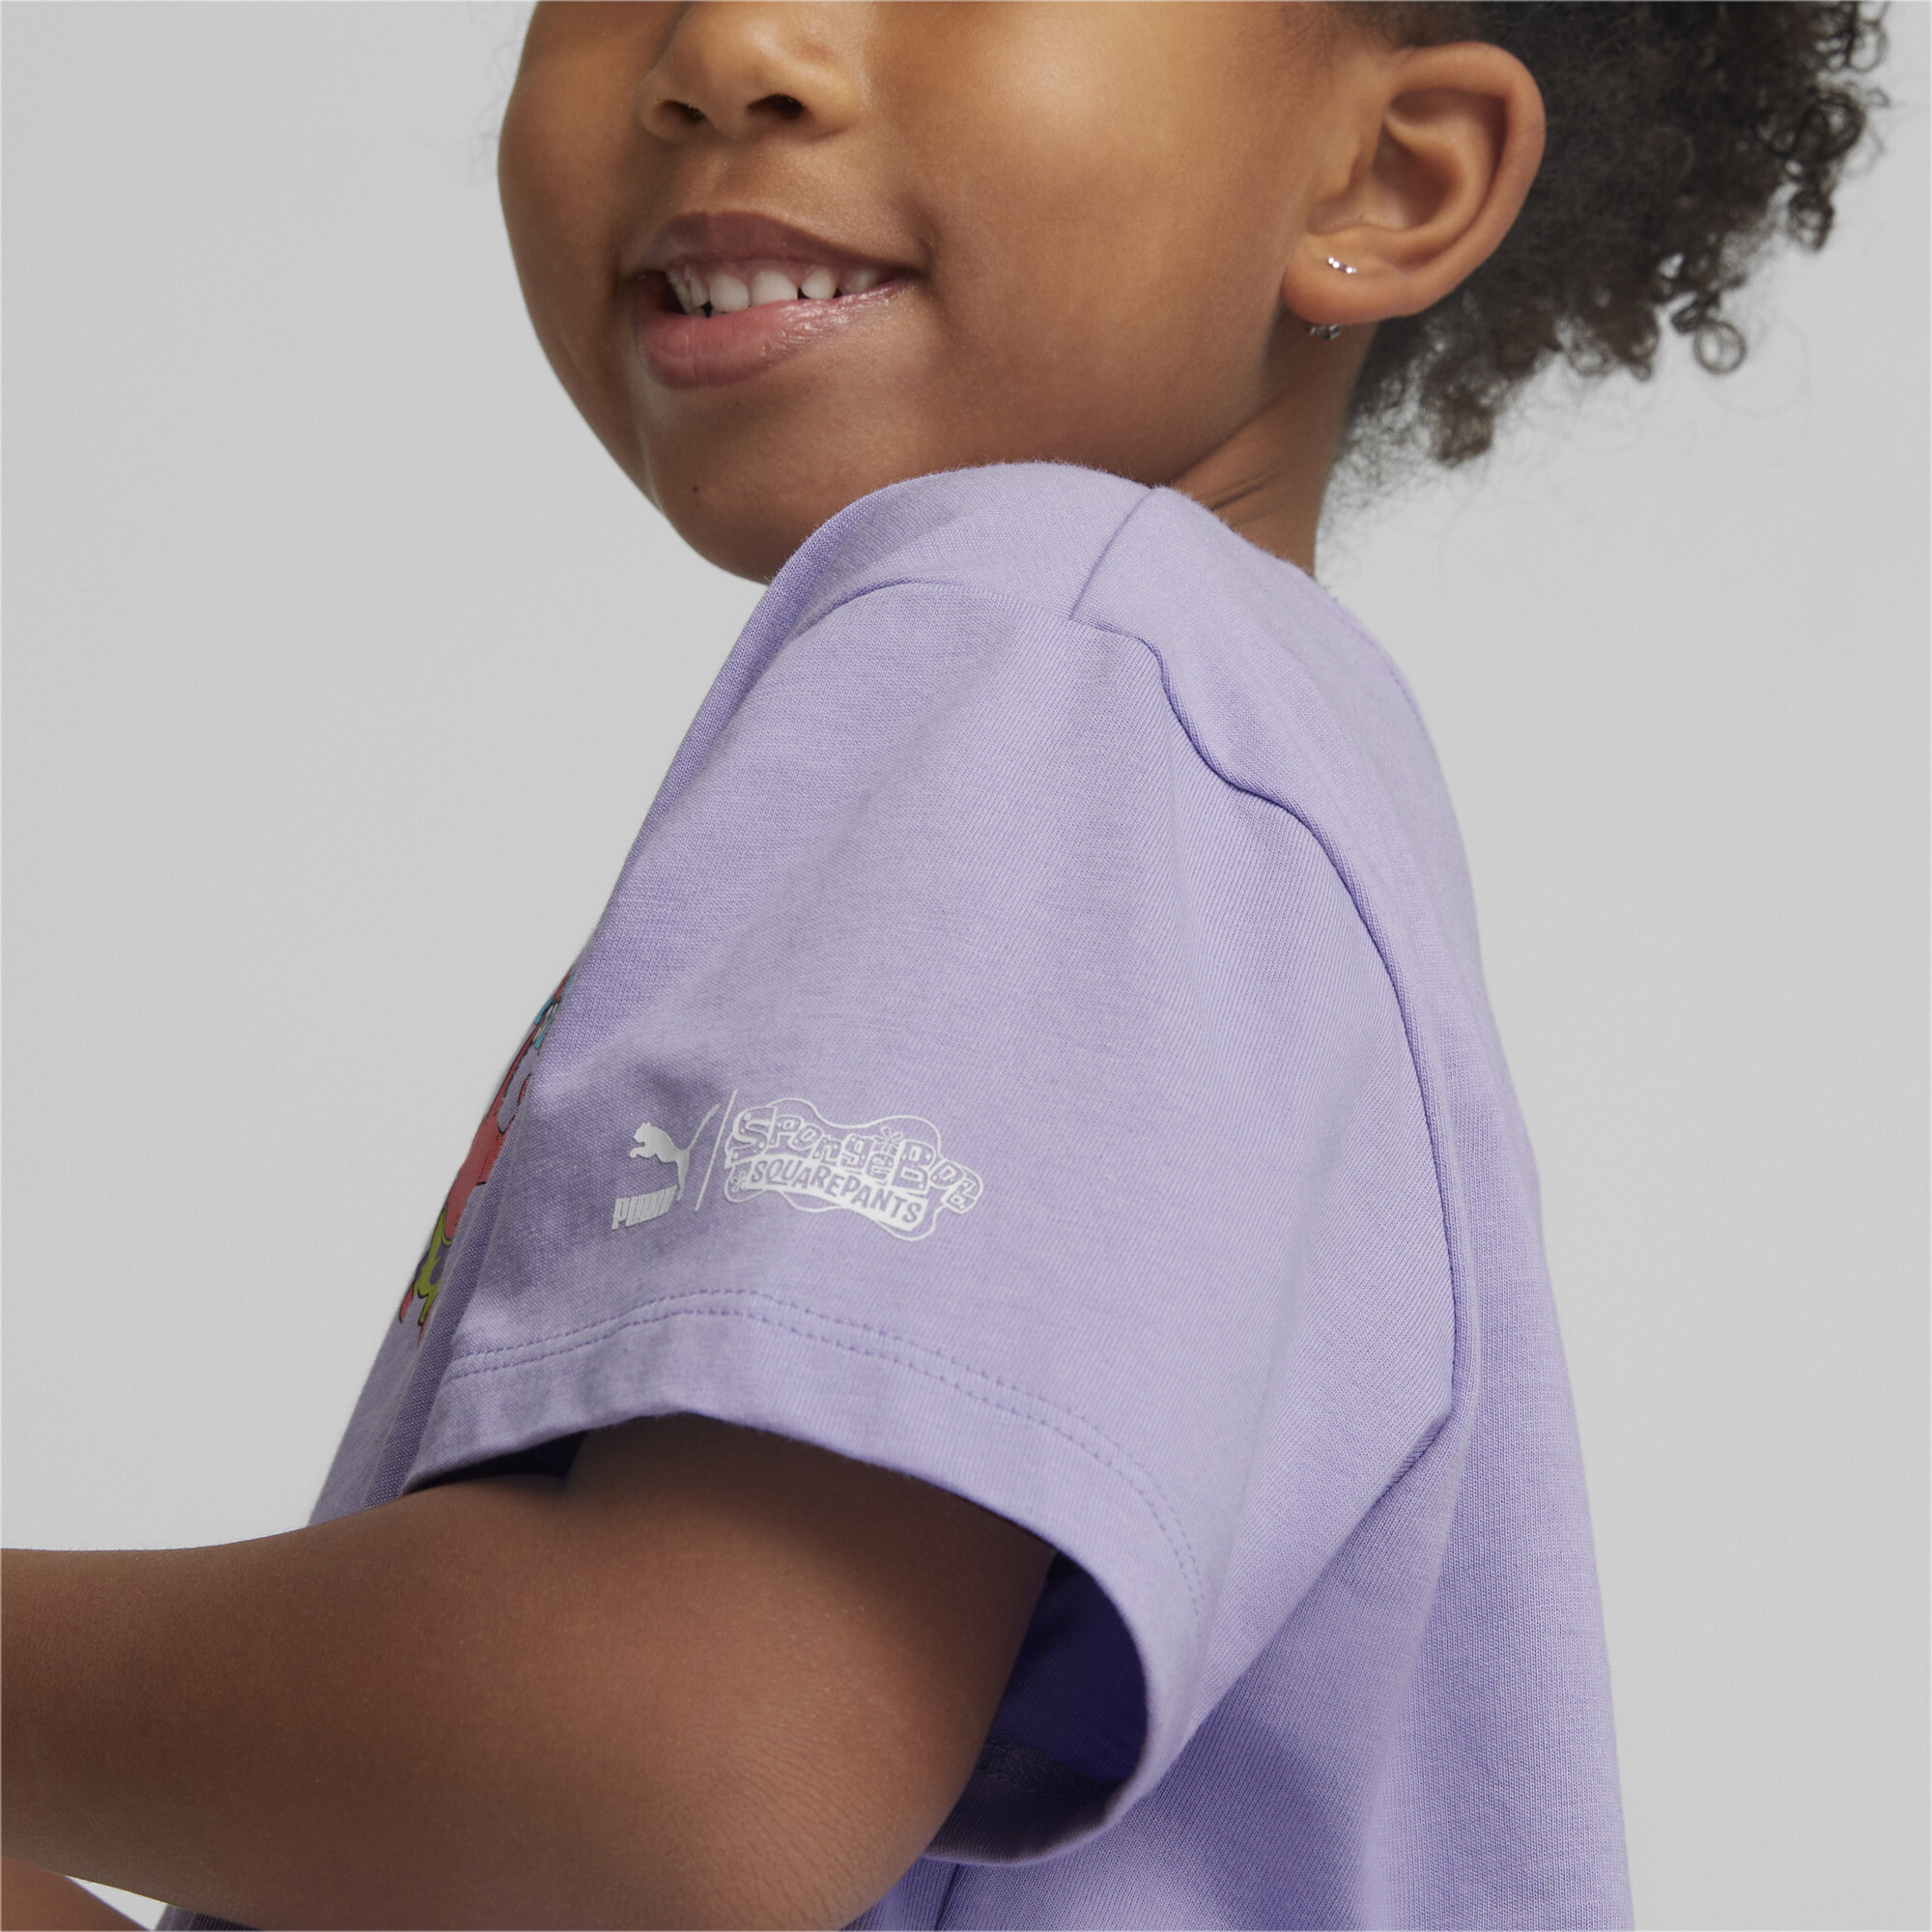 PUMA X SPONGEBOB T-Shirt Kids In Purple, Size 9-10 Youth